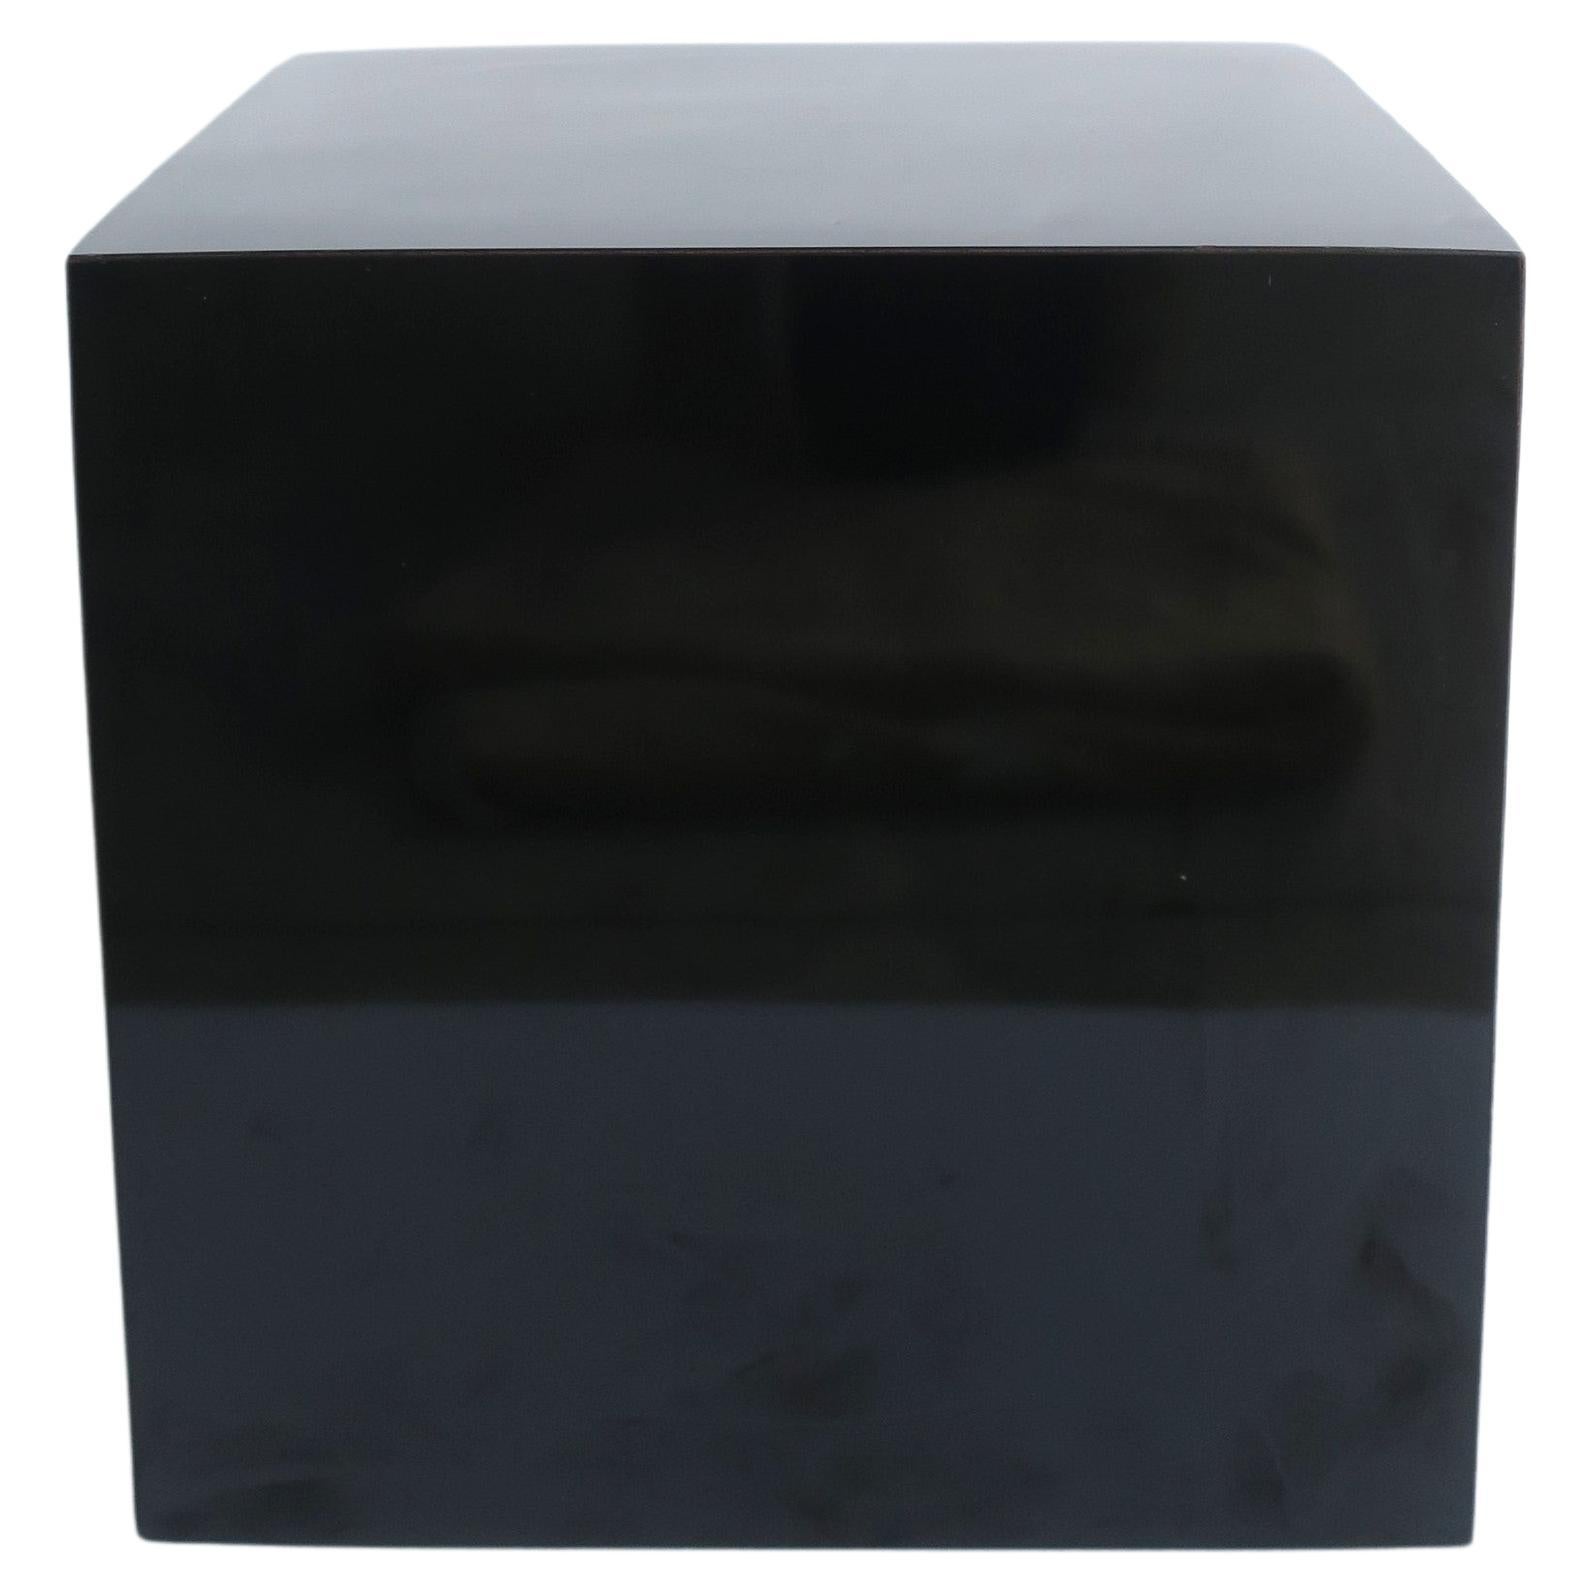 Black Cube Pedestal Table